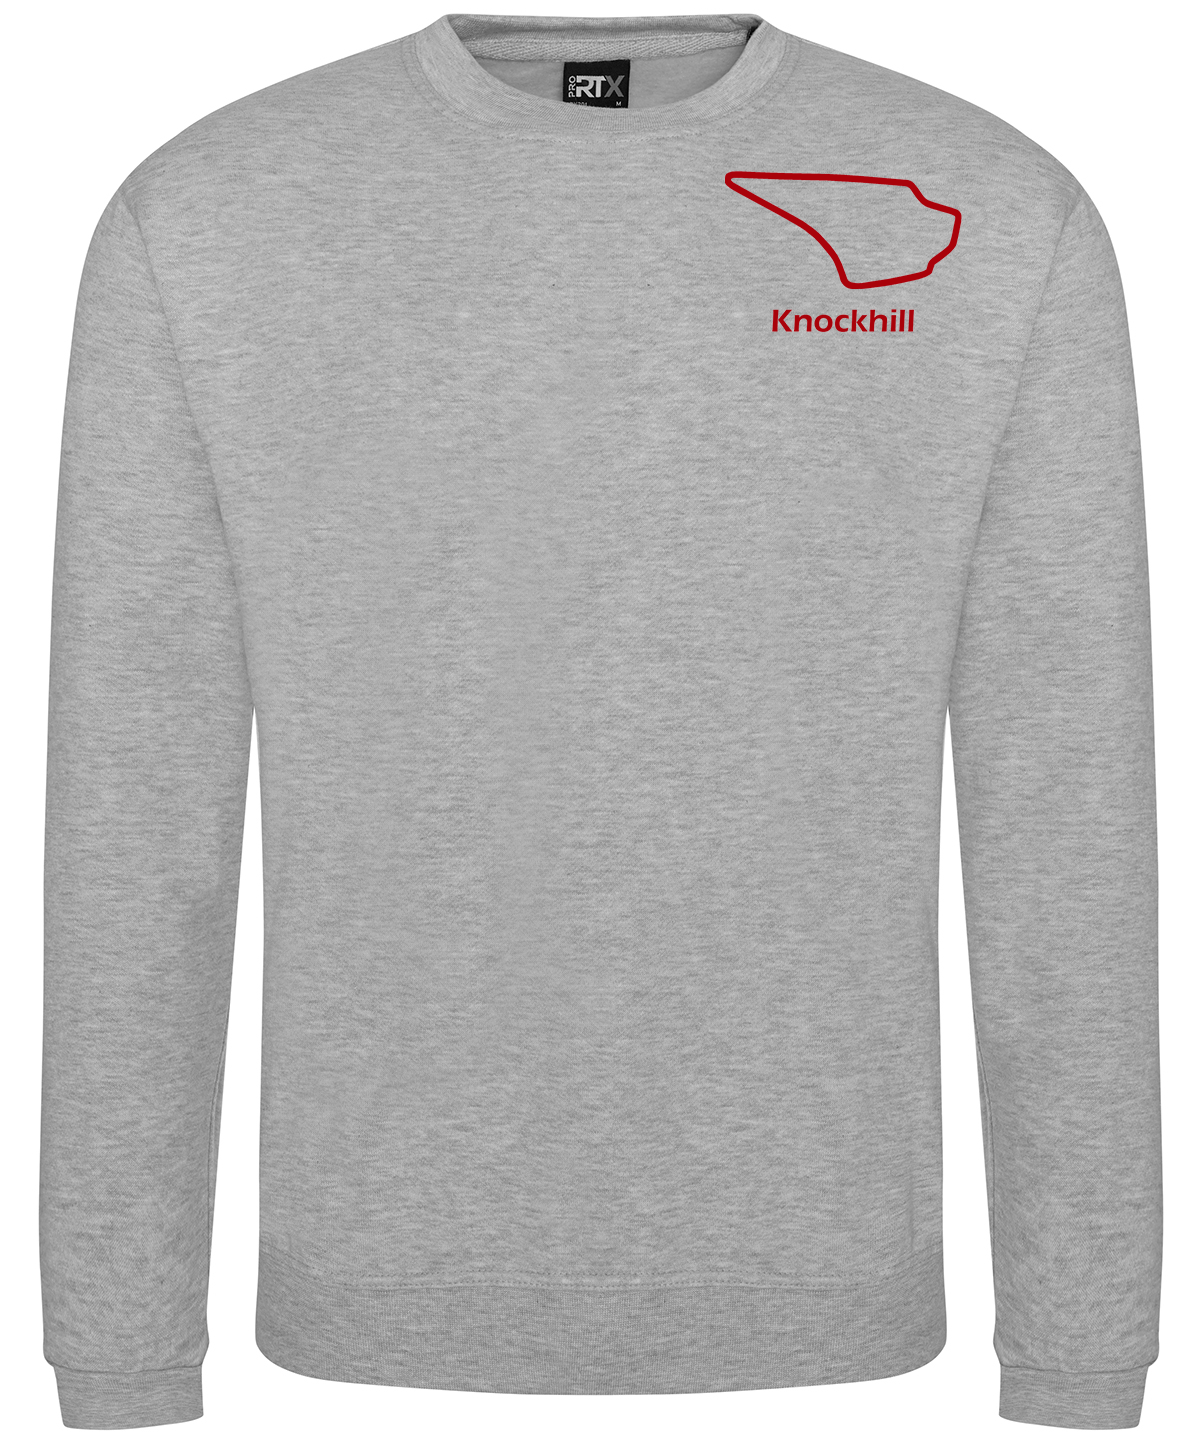 Knockhill Sweatshirt